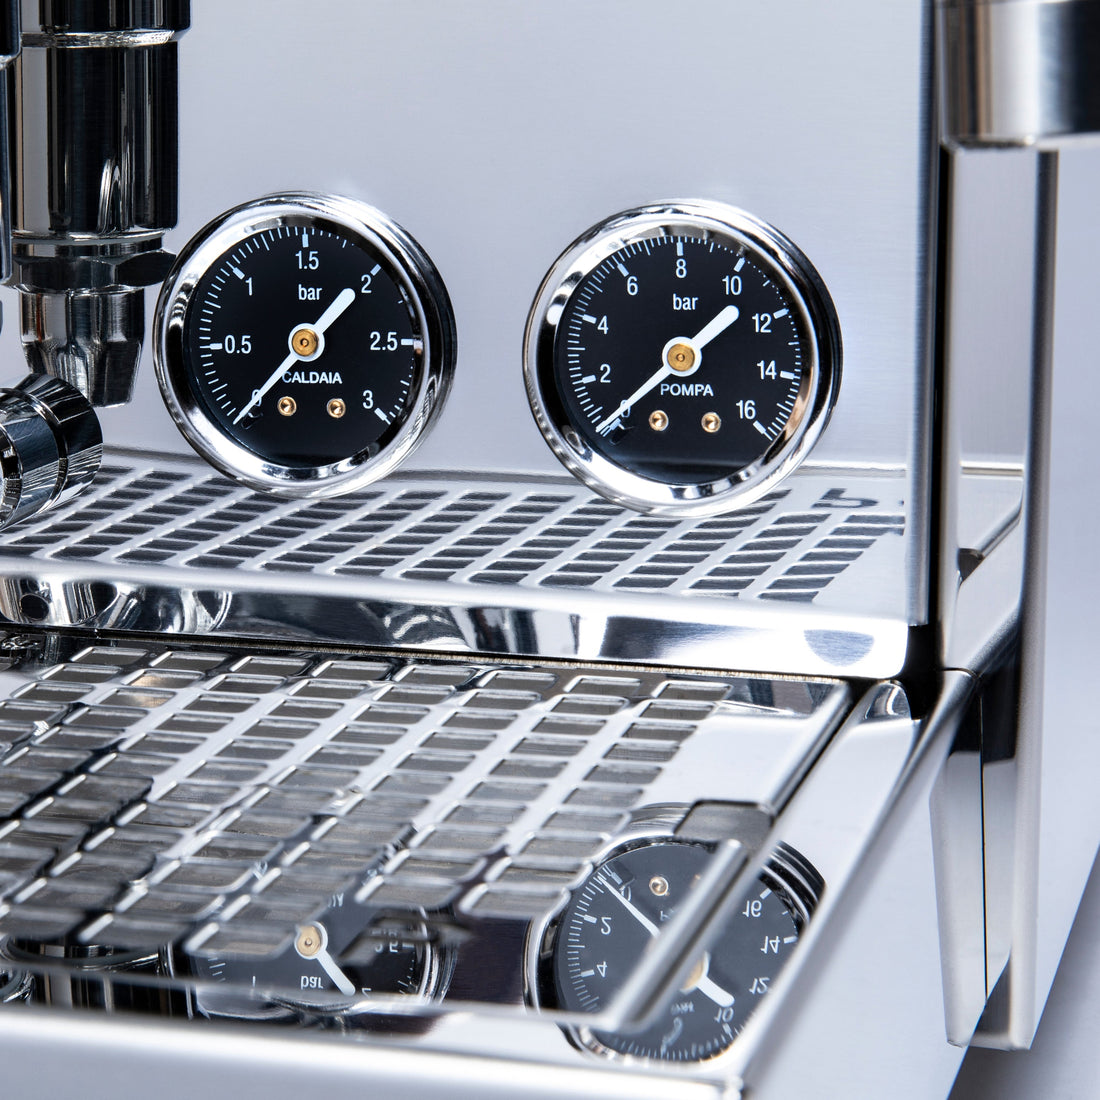 Profitec Pro 500 PID Espresso Machine with Flow Control with Wenge Accents